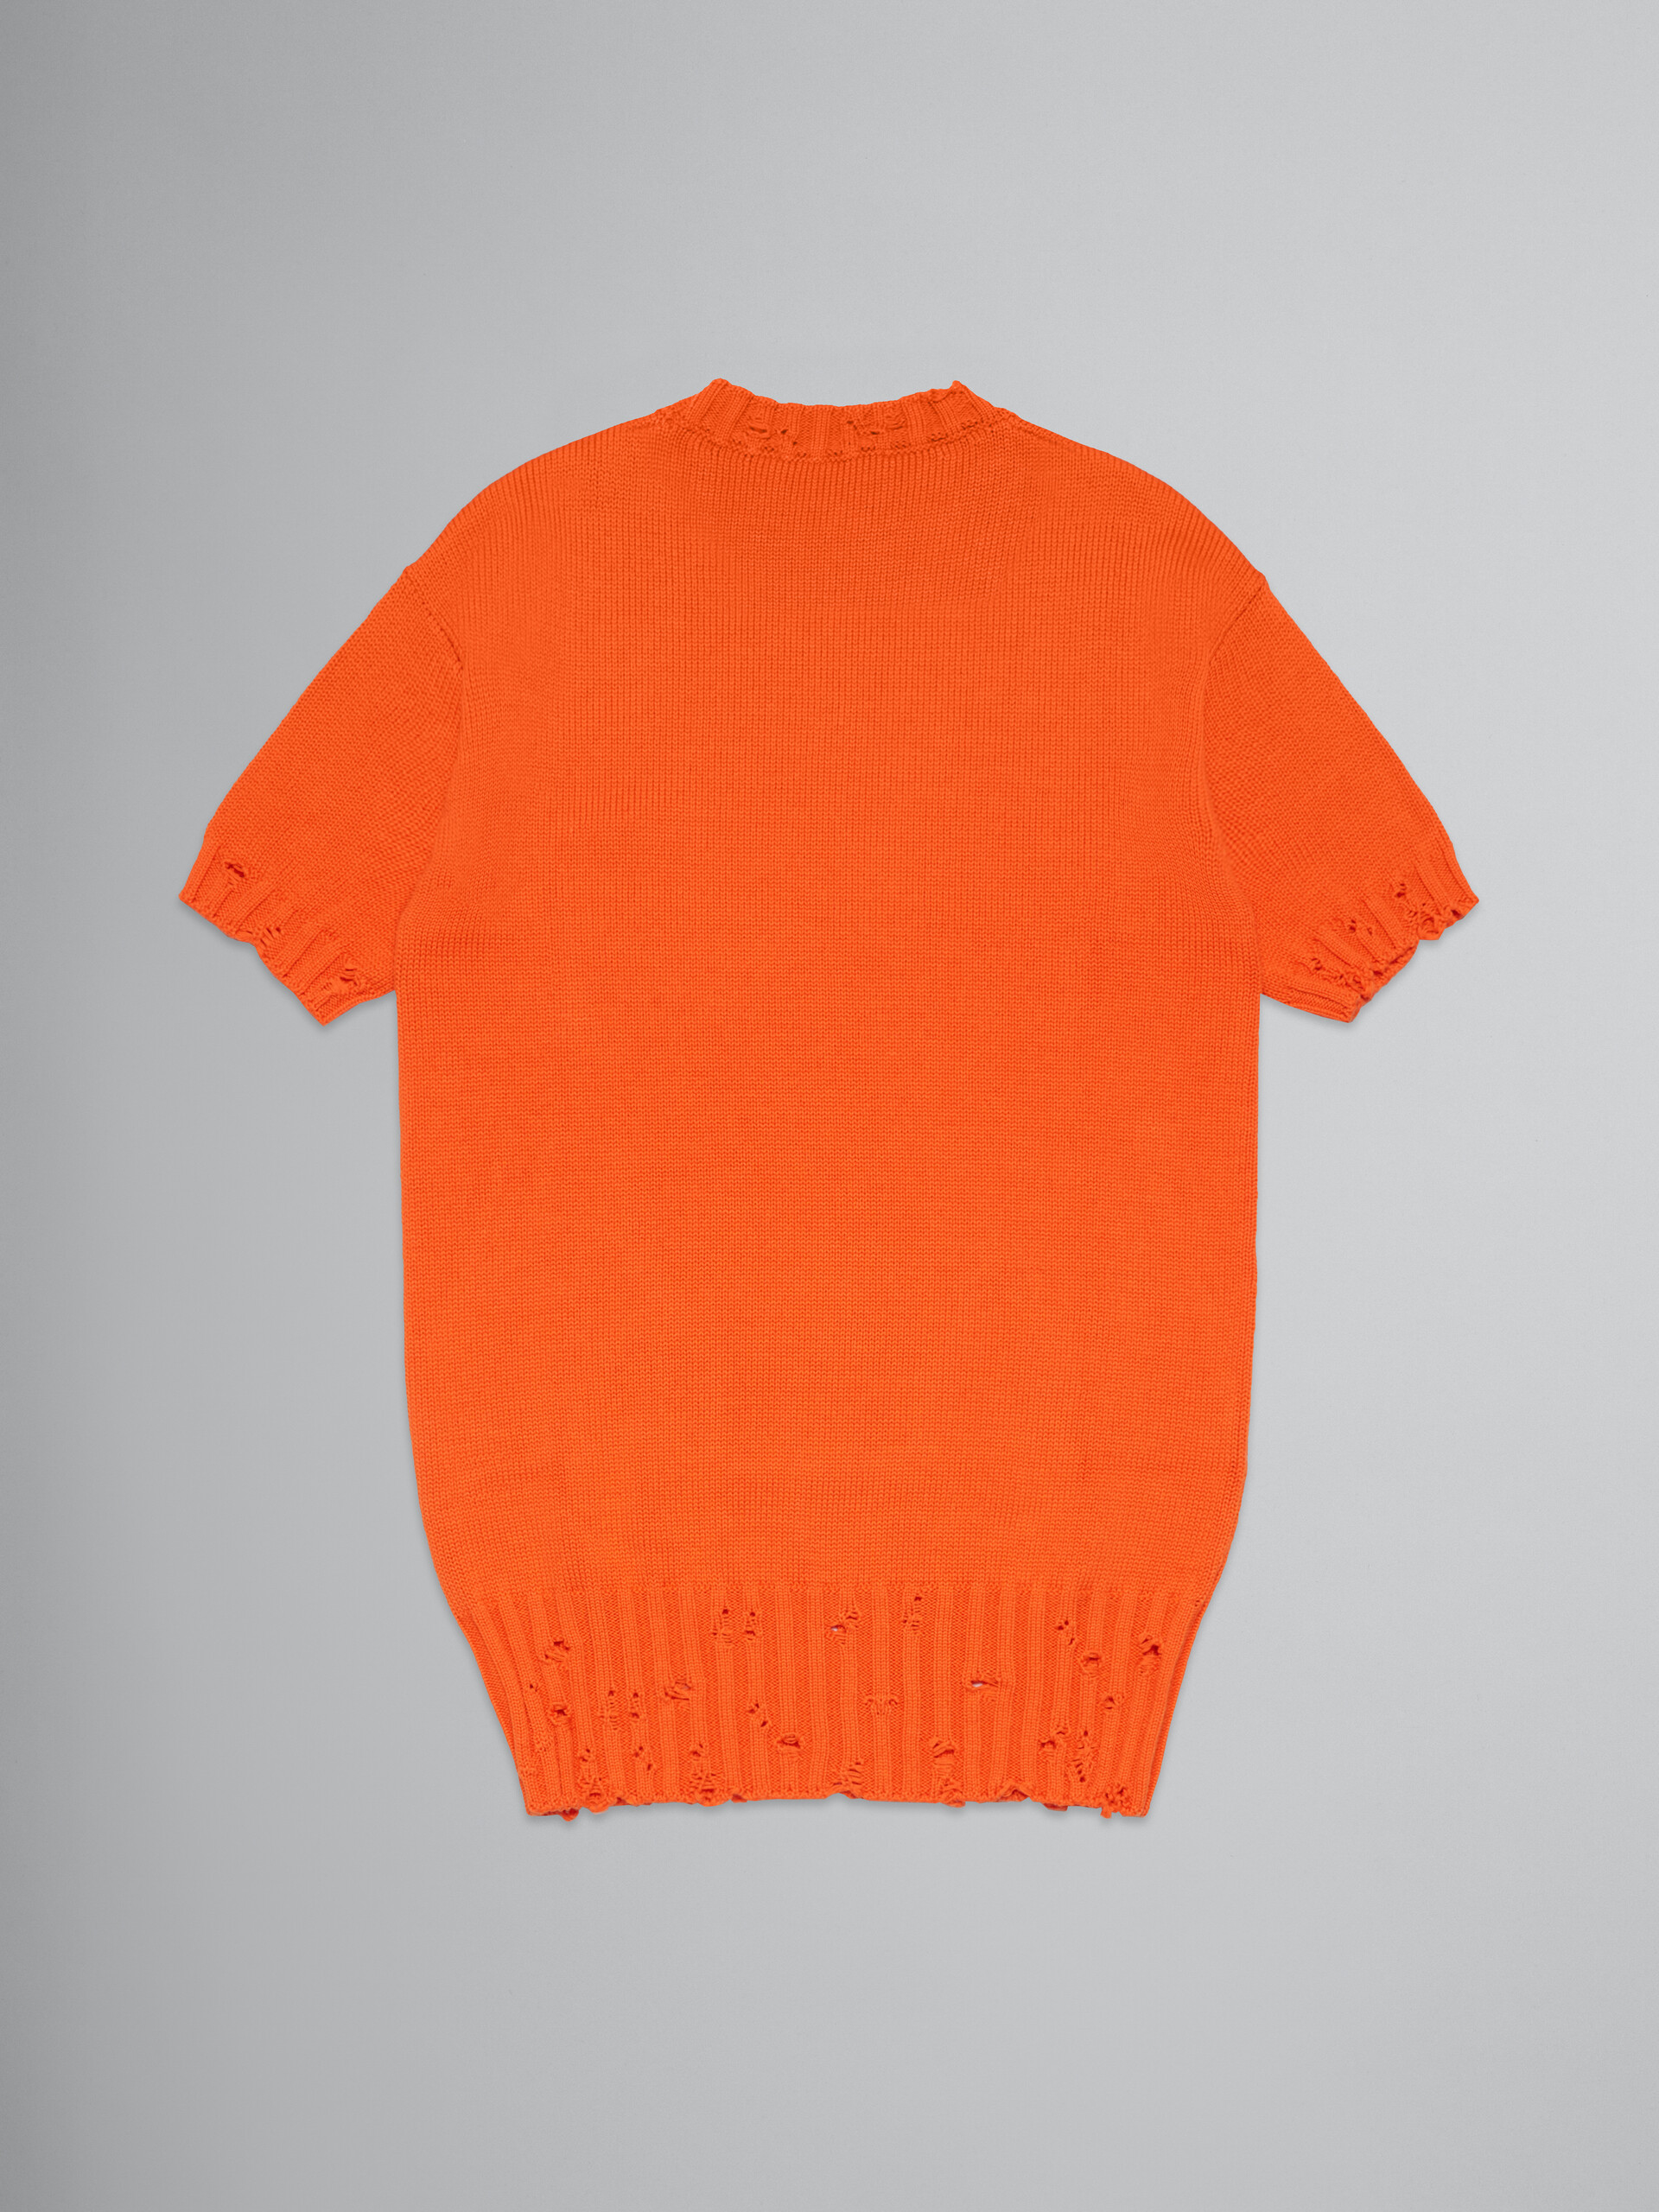 Vestido de algodón naranja - Vestidos - Image 2